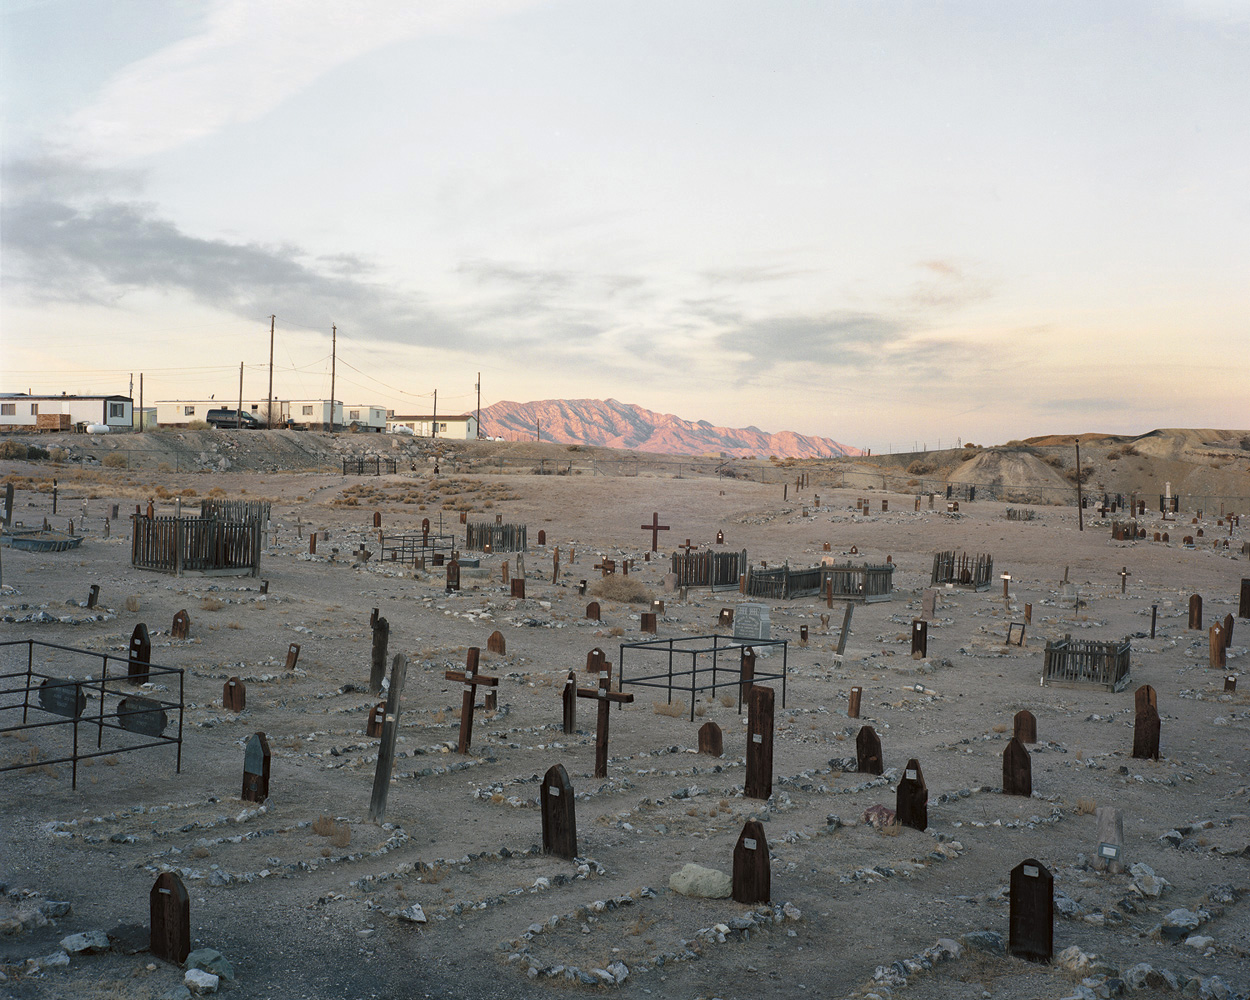 Cemetery, Tonopah, Nevada, 2012